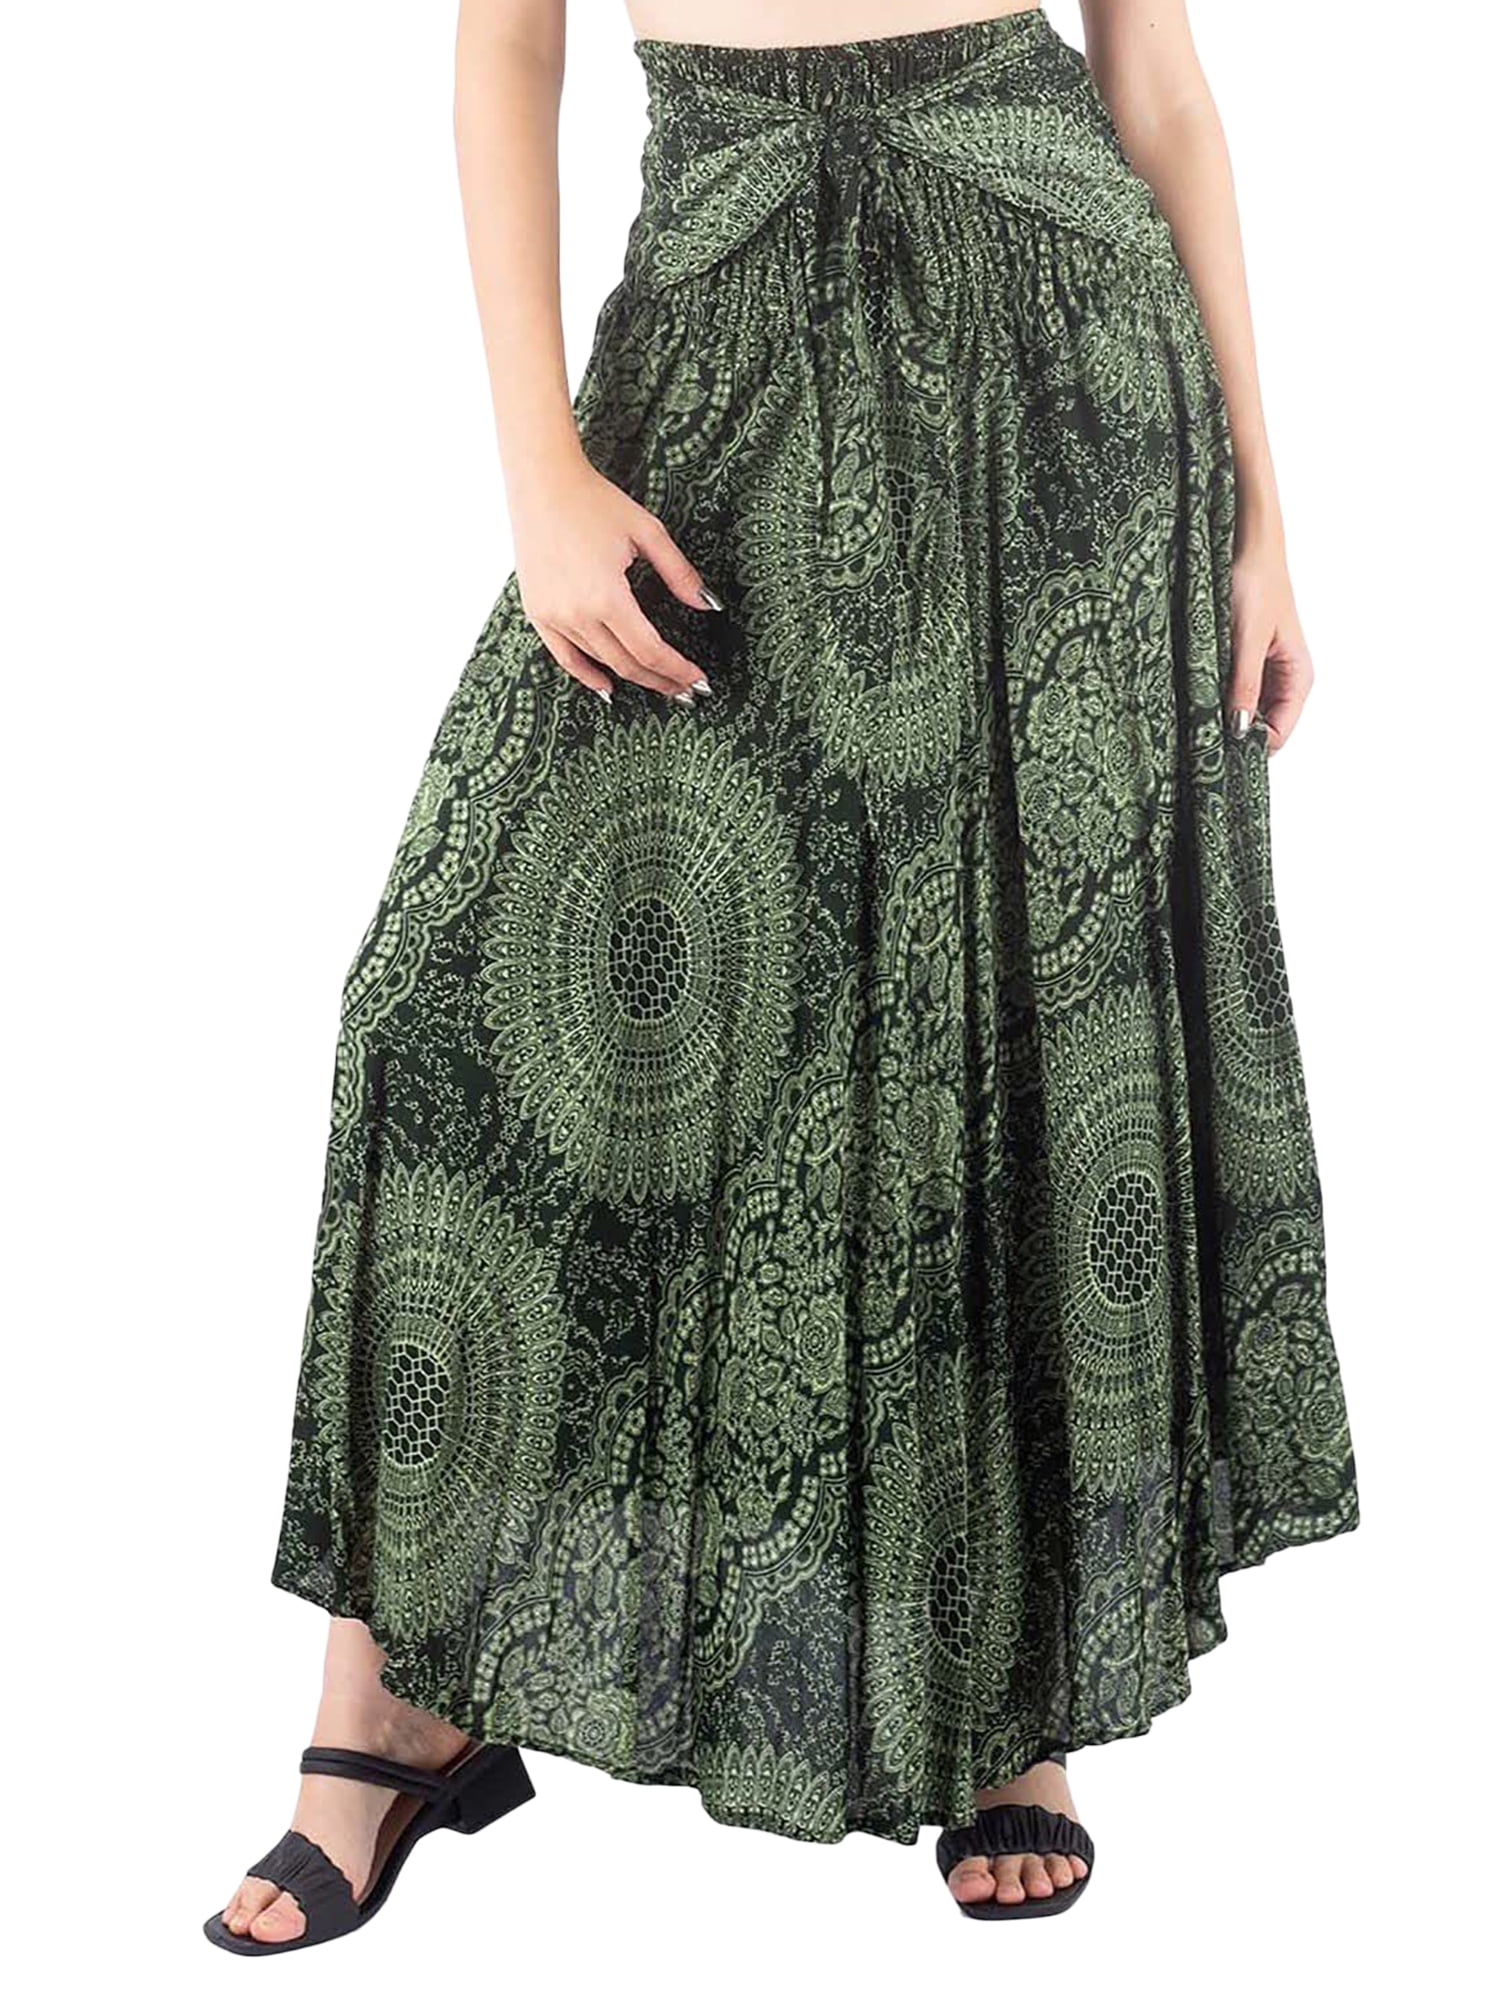 Women's Wear Green Cotton Long Skirt Plus Size Maxi Skirt Elastic Waist Gypsy Skirt Bohemian Skirt Hippie Skirt Wedding Gift For Women